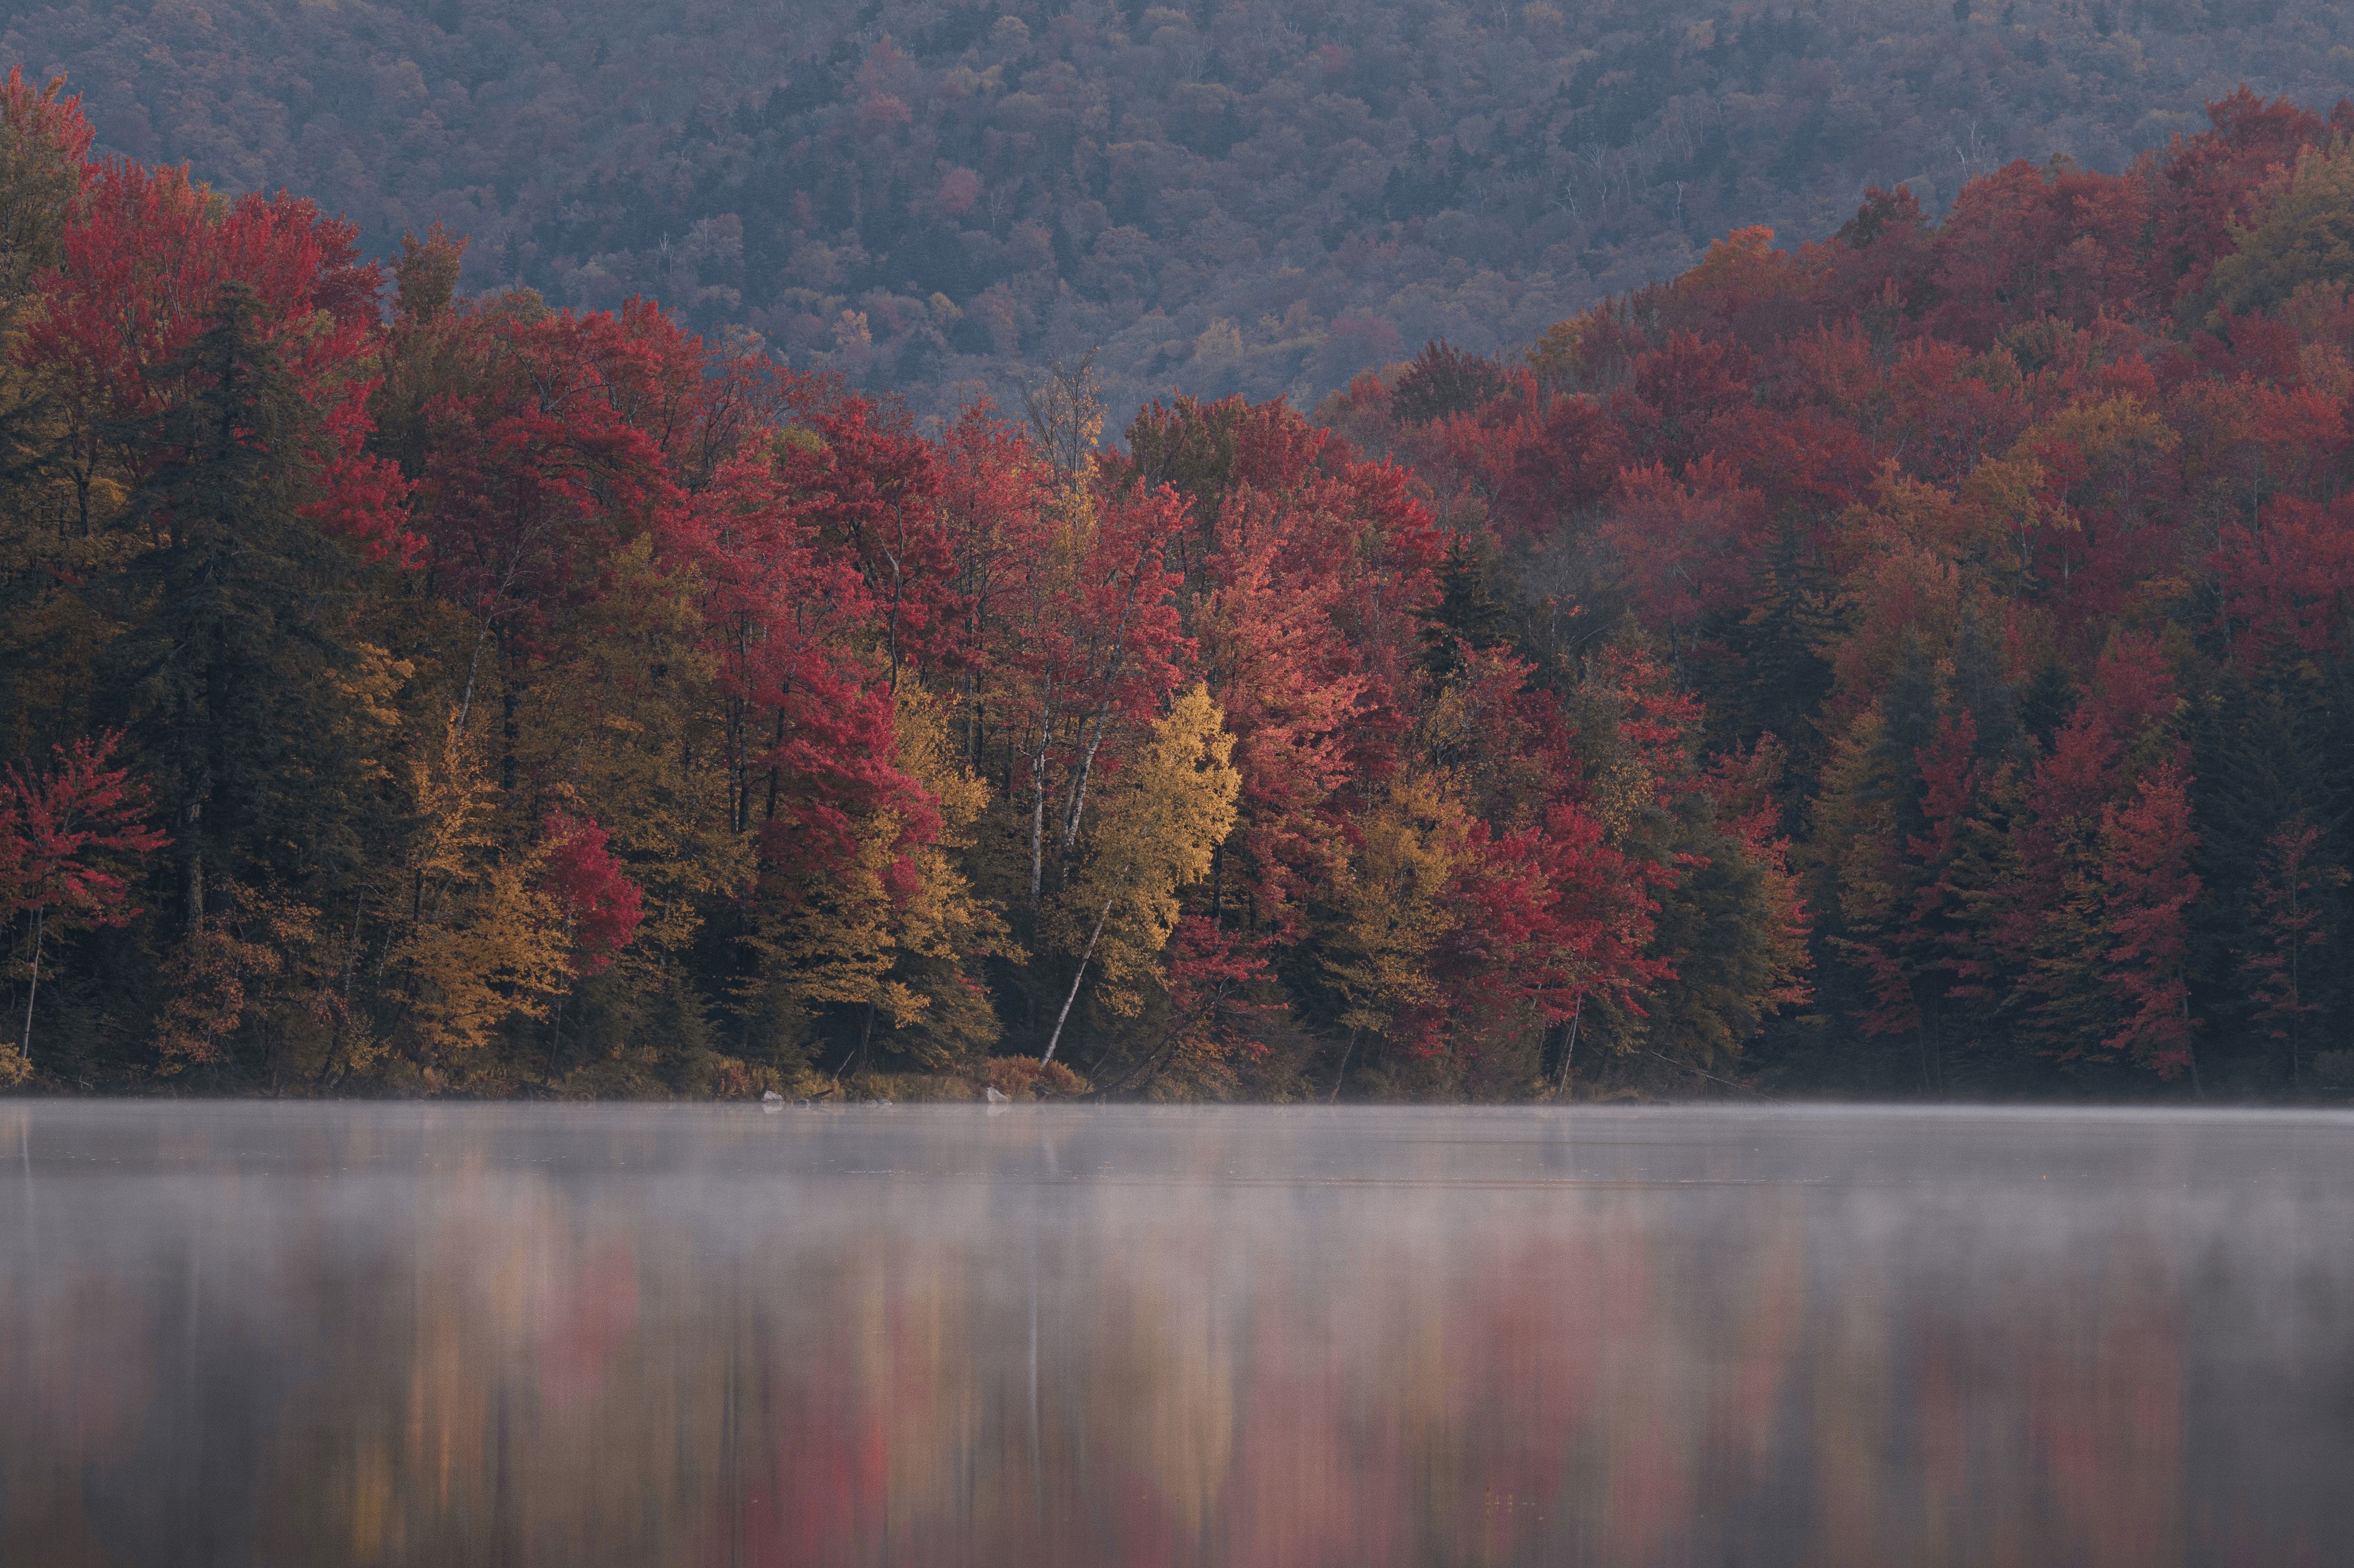 Foggy Lake by Killington Mountain before the Fall photo by Dennis Maida